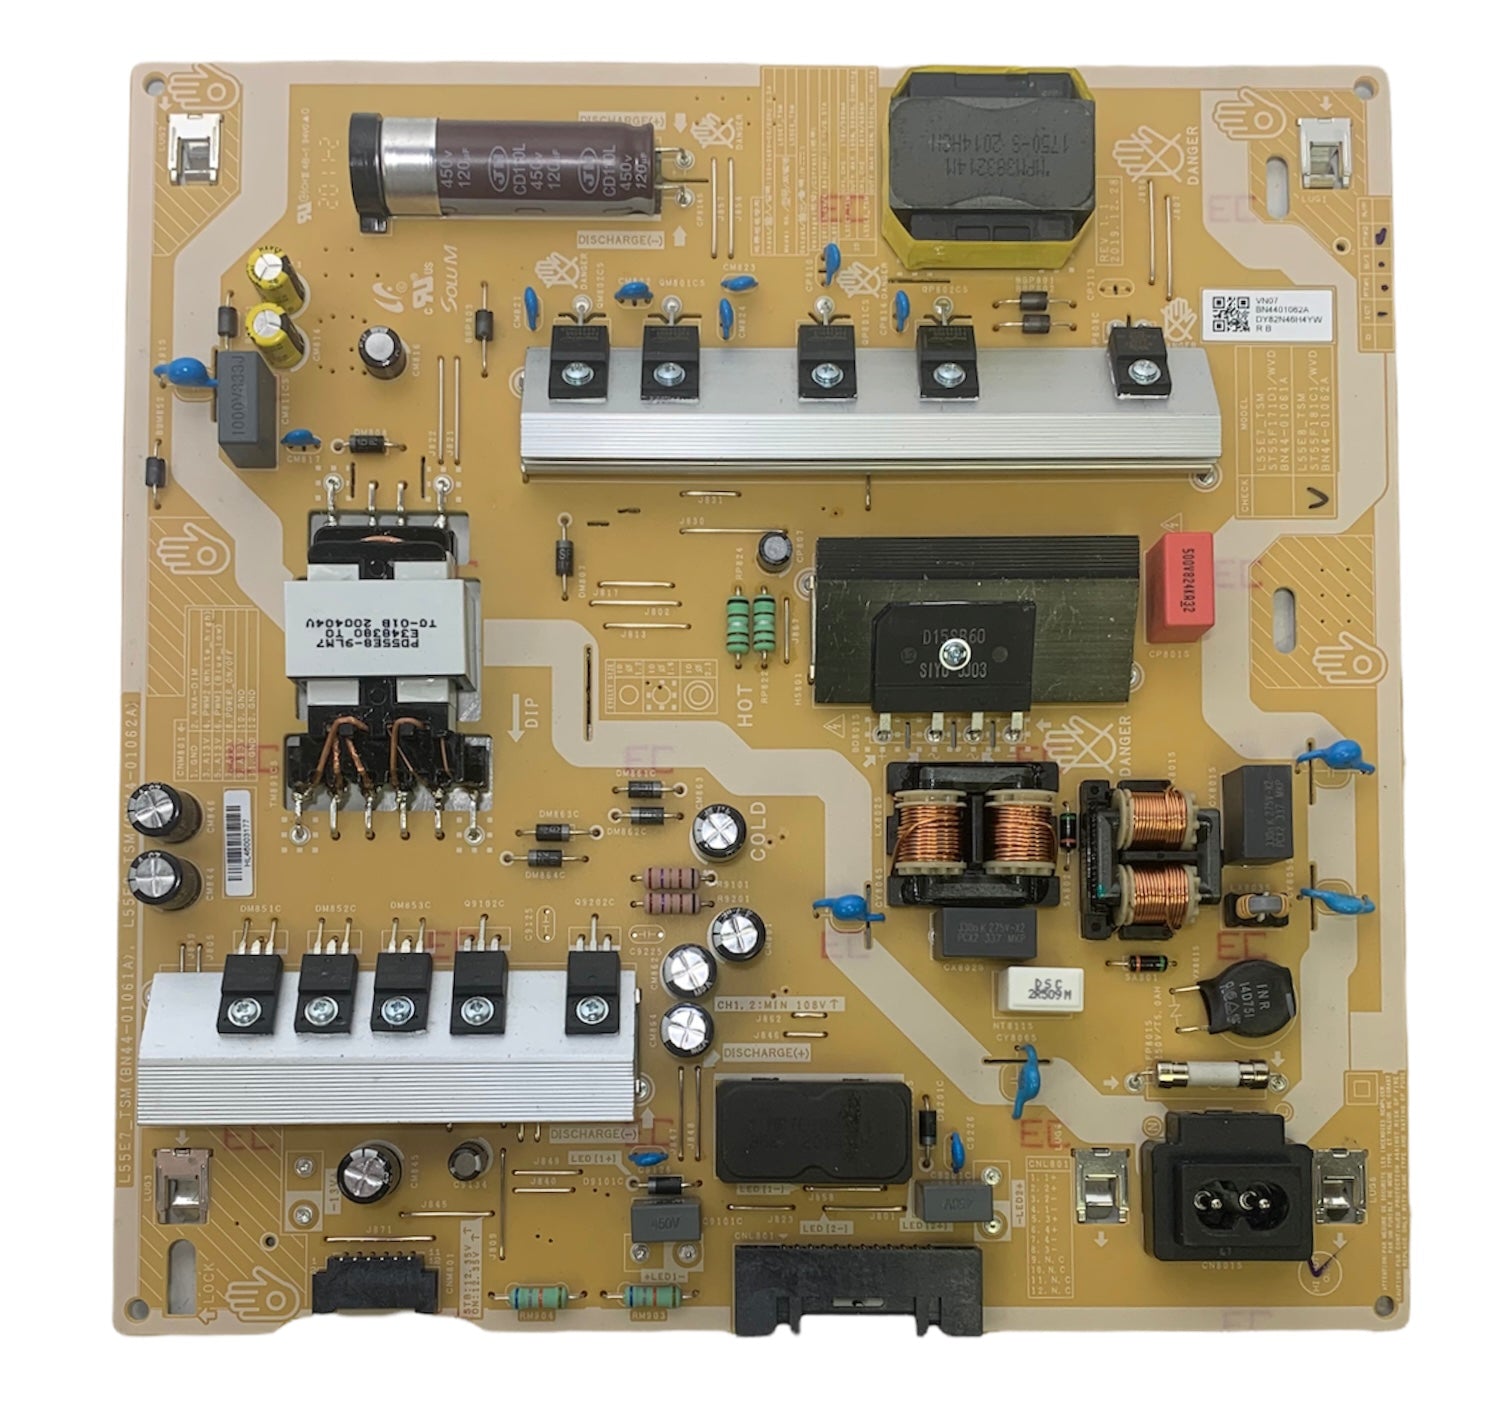 Samsung BN44-01062A Power Supply / LED Driver Board